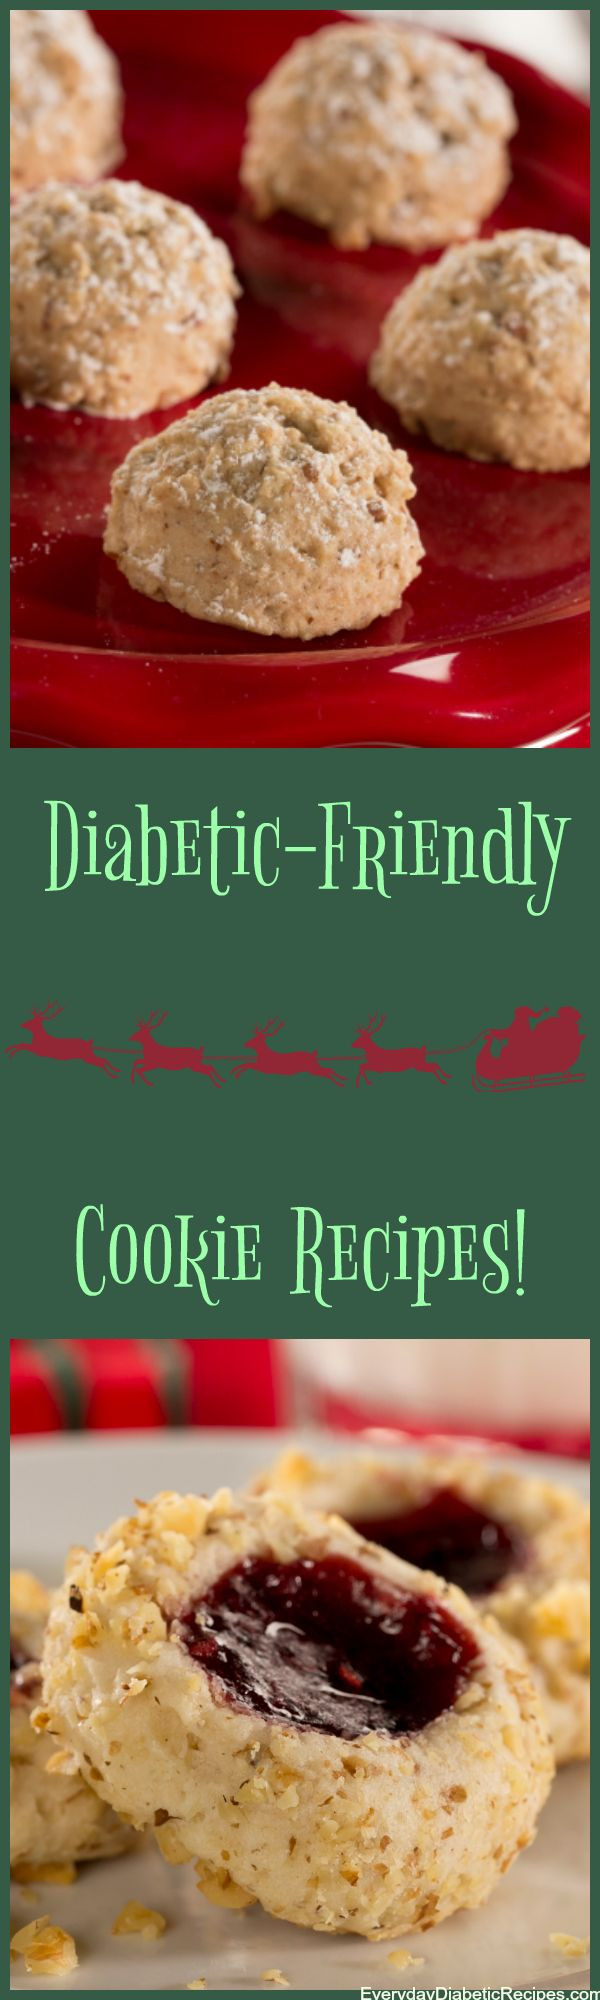 Diabetic Christmas Cookie Recipes
 Best 25 Diabetic cookie recipes ideas on Pinterest